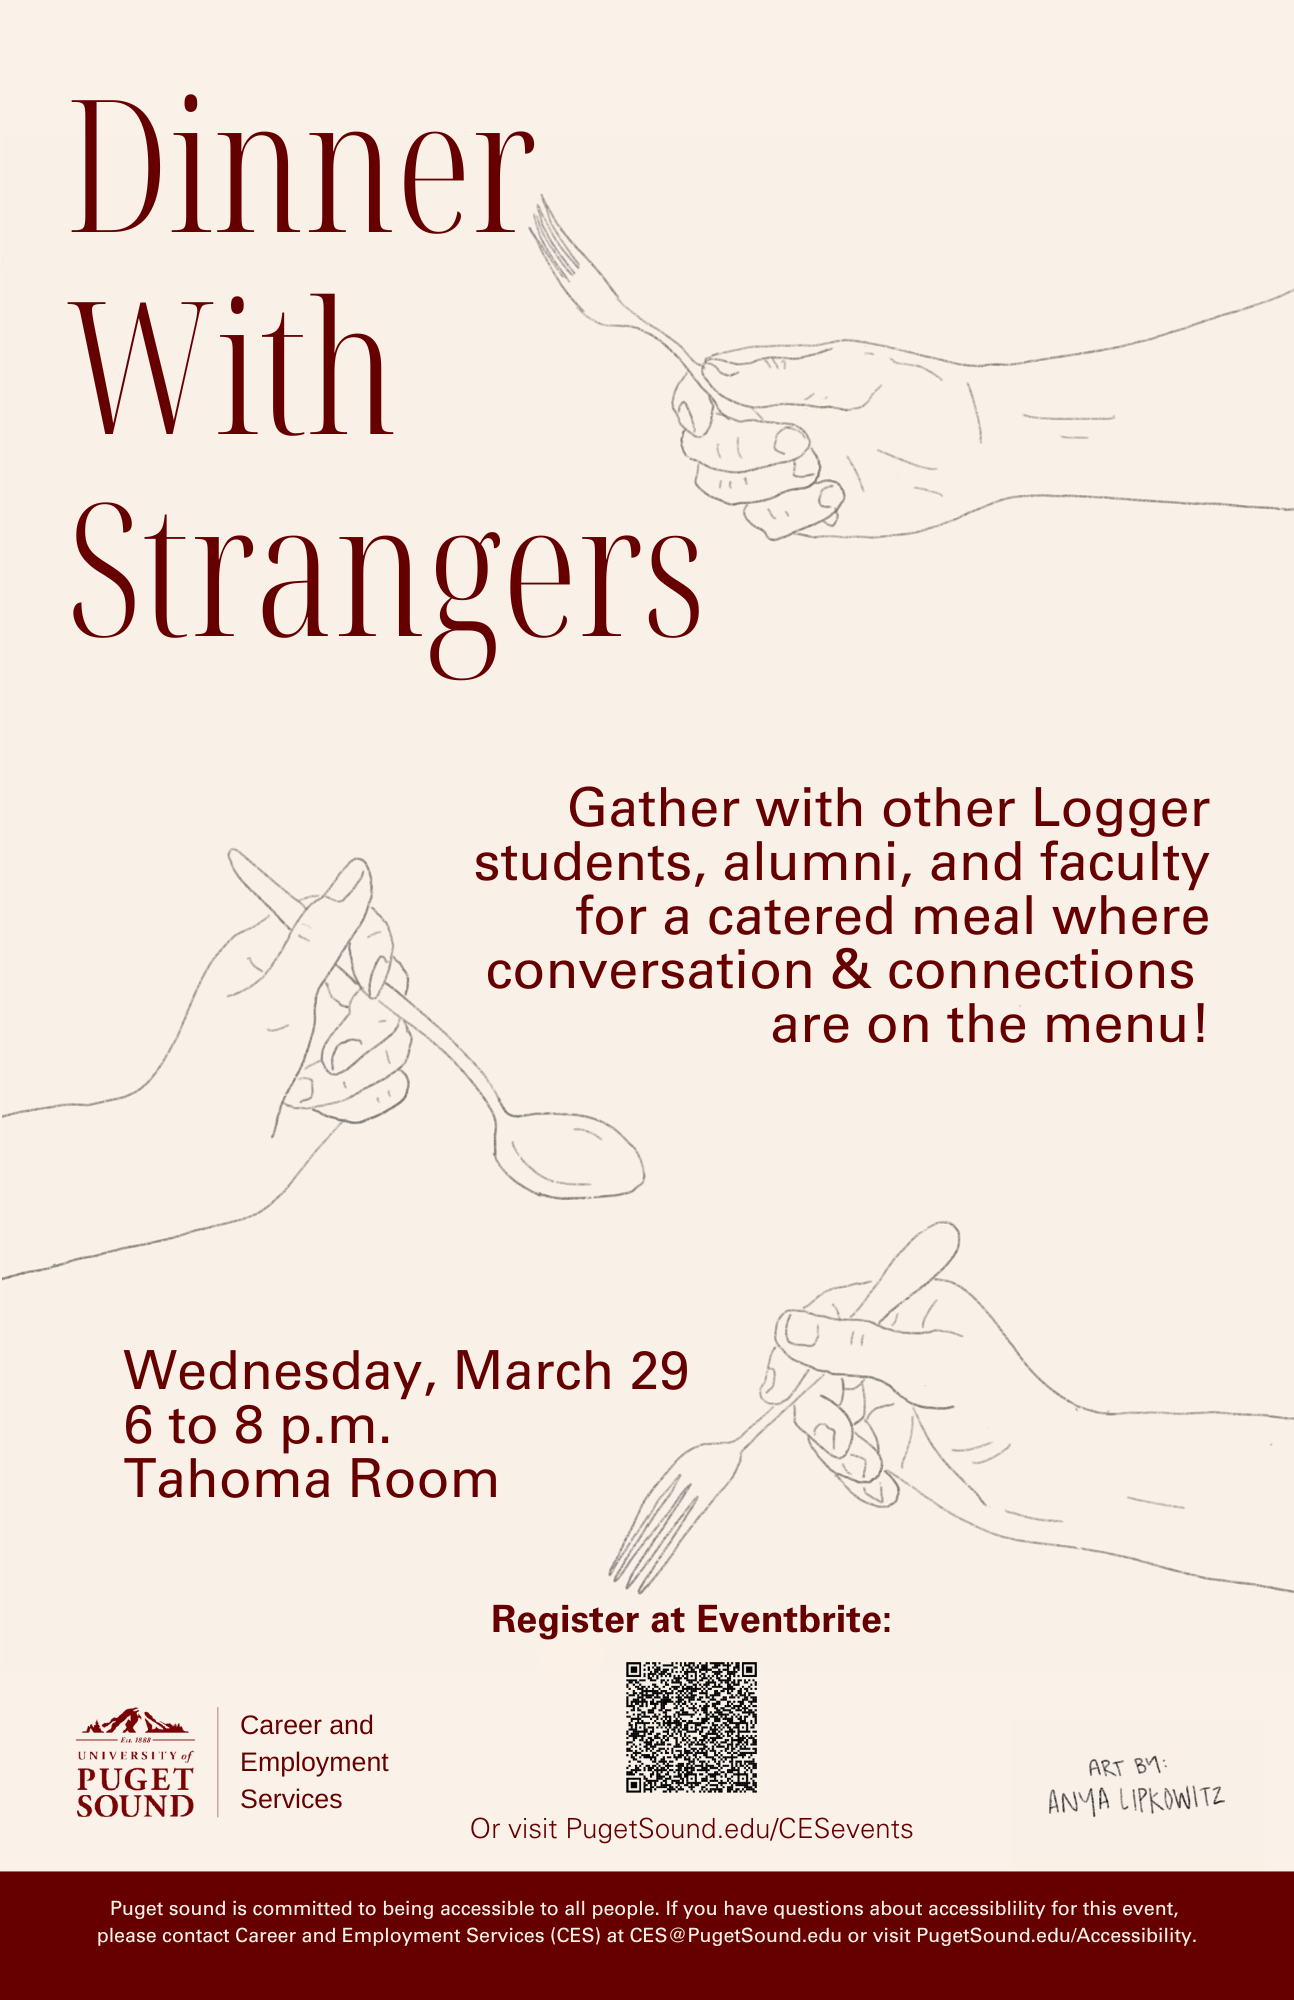 Dinner with Strangers poster